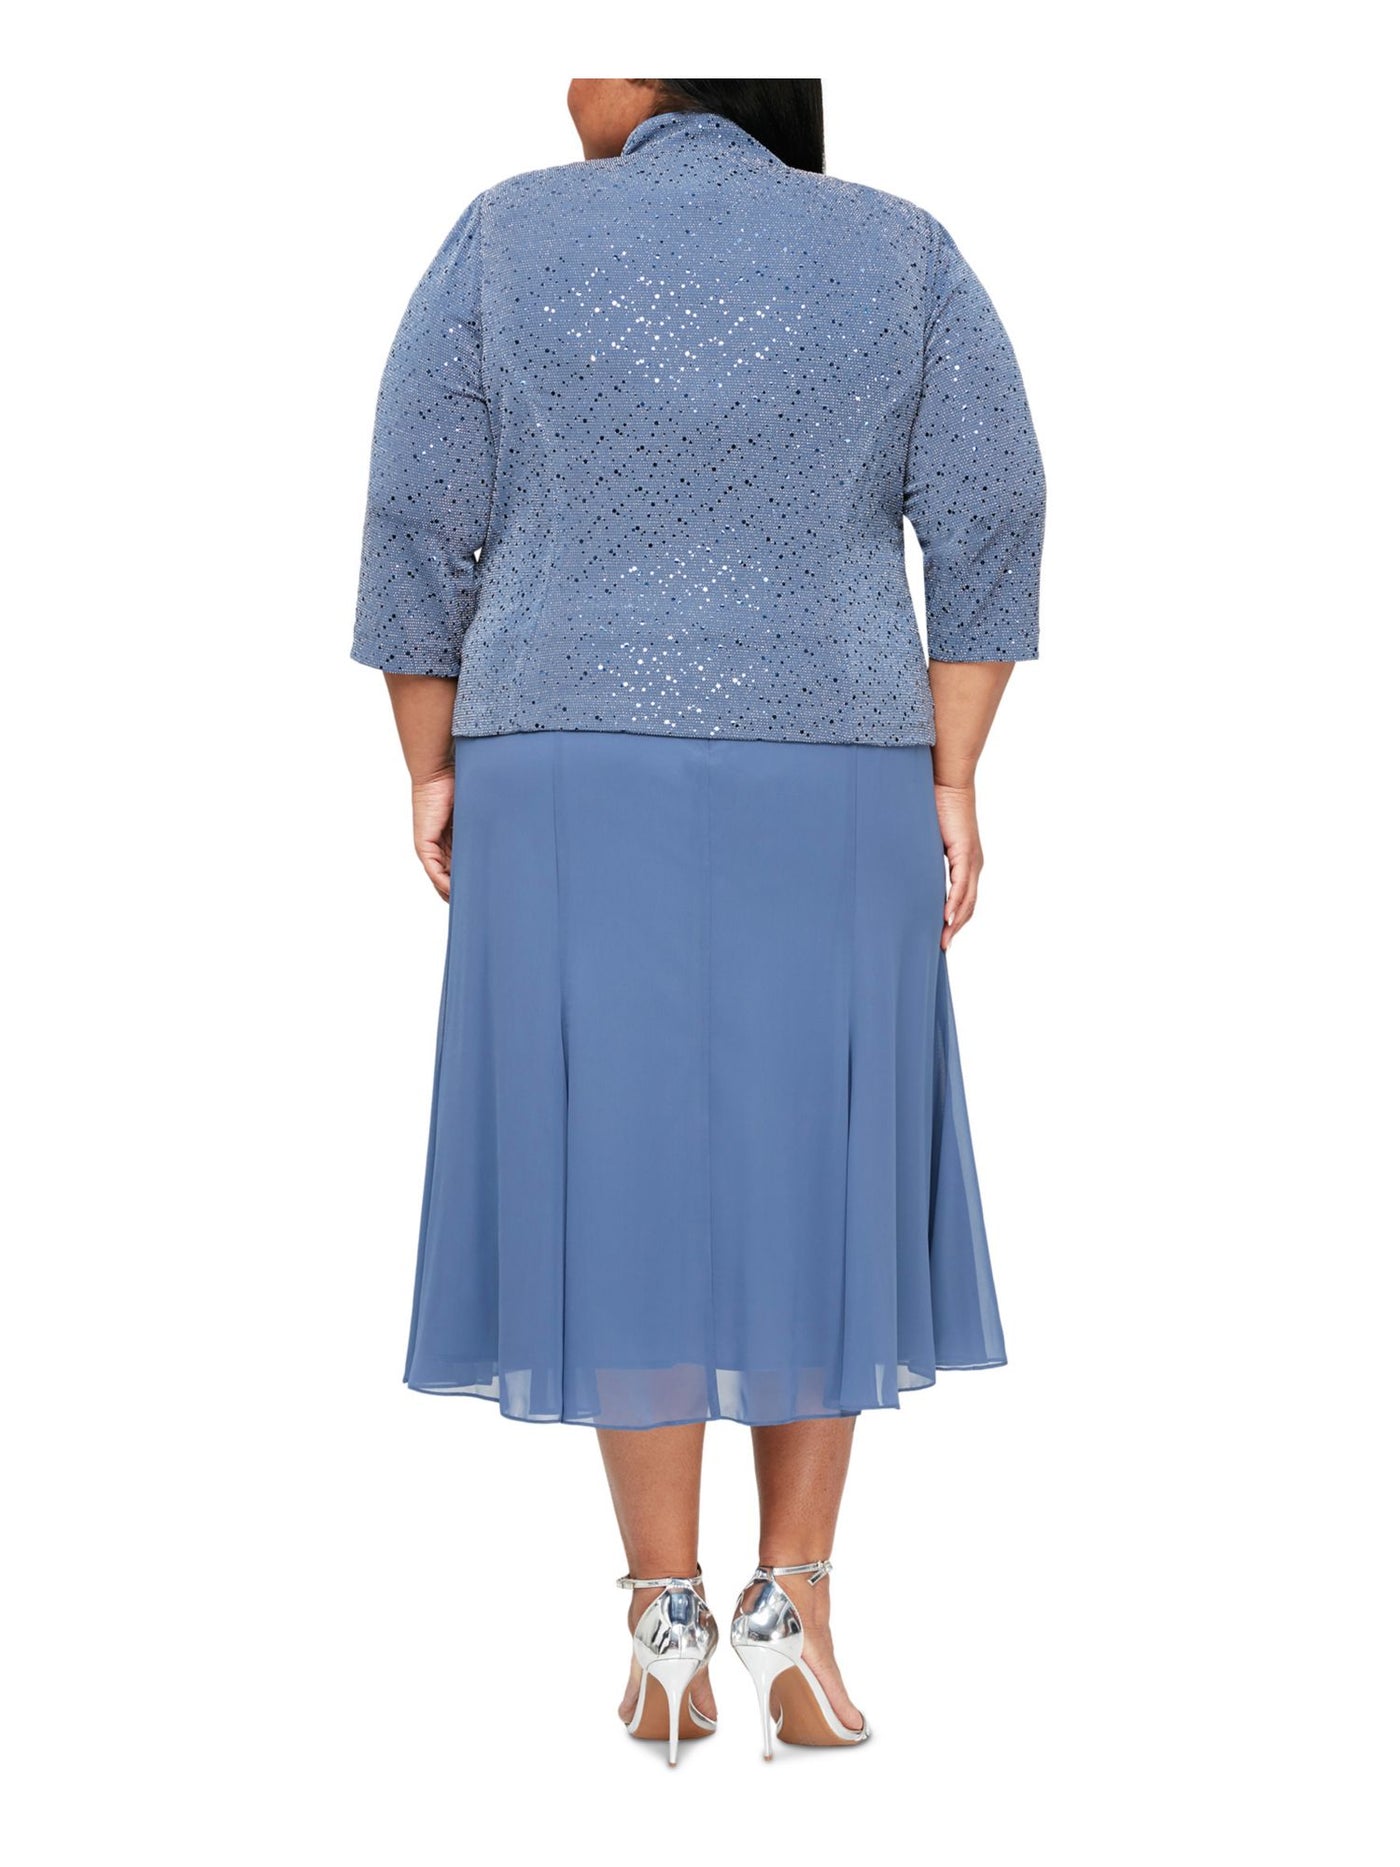 ALEX EVENINGS WOMAN Womens Blue Unlined Sheer Shoulder Pads Polka Dot 3/4 Sleeve Open Front Evening Cardigan Plus 18W